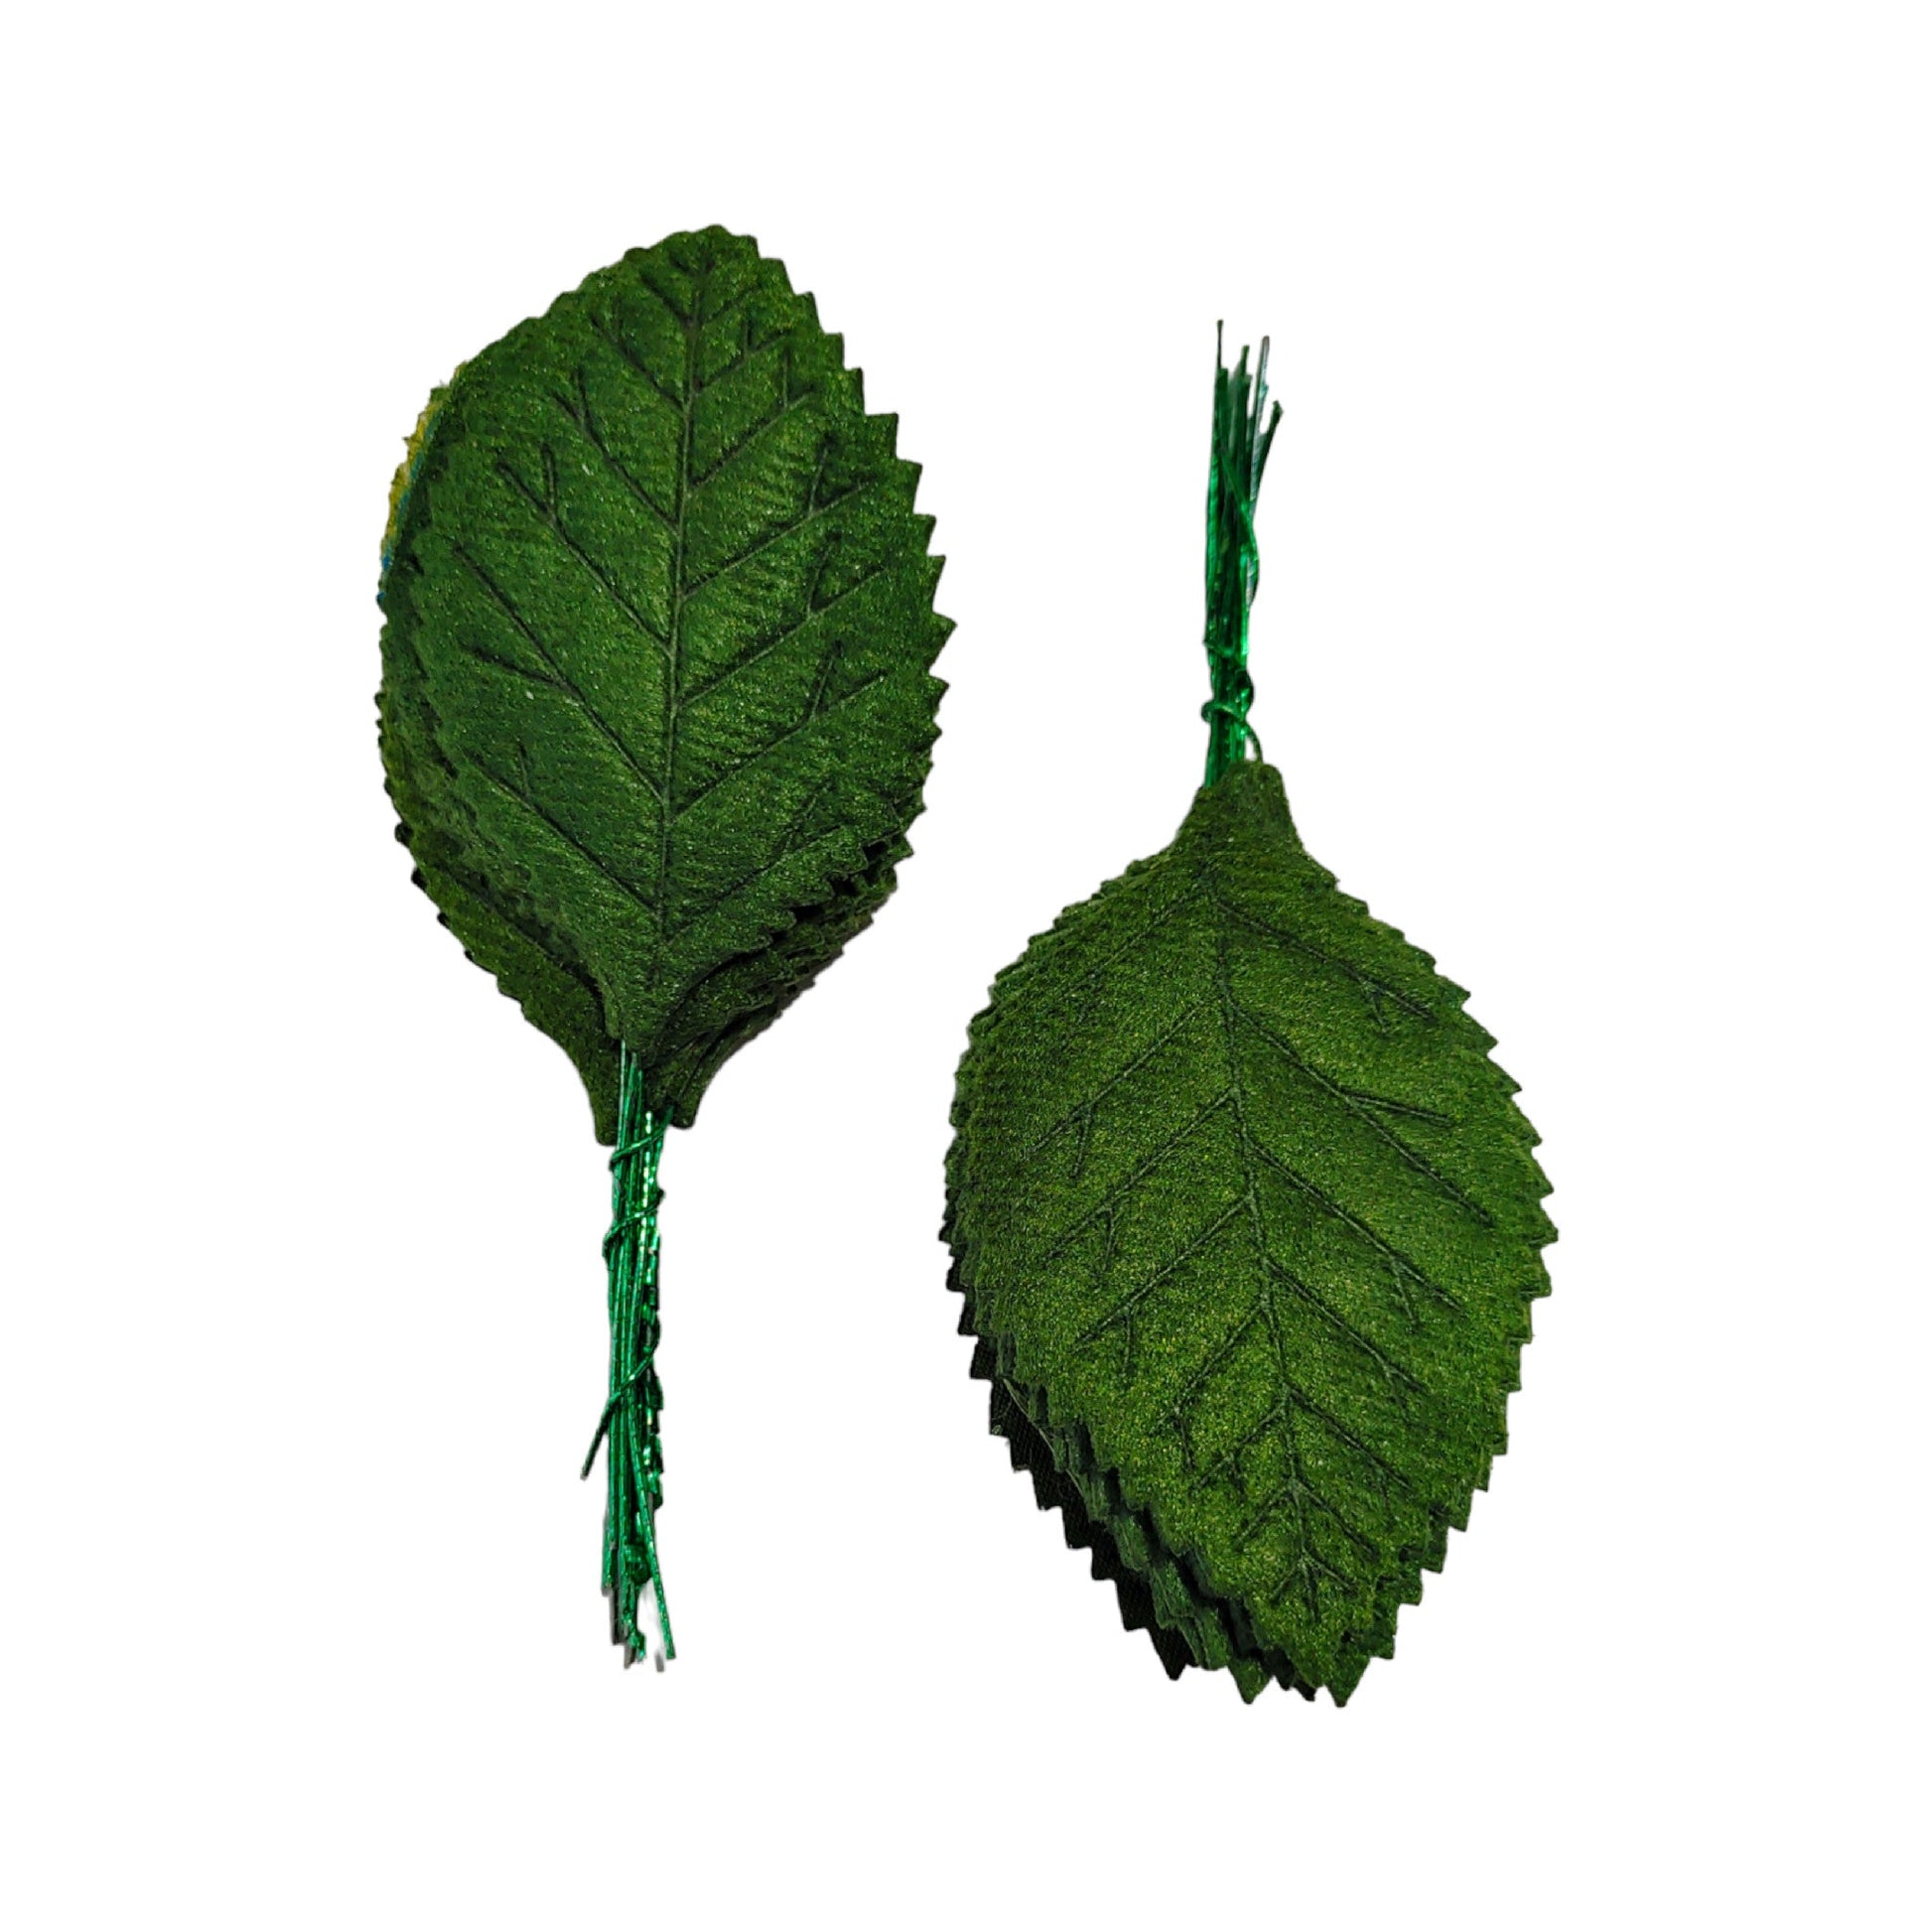 Decorative Artificial Fabric Leaf for Decor, Craft or Textile